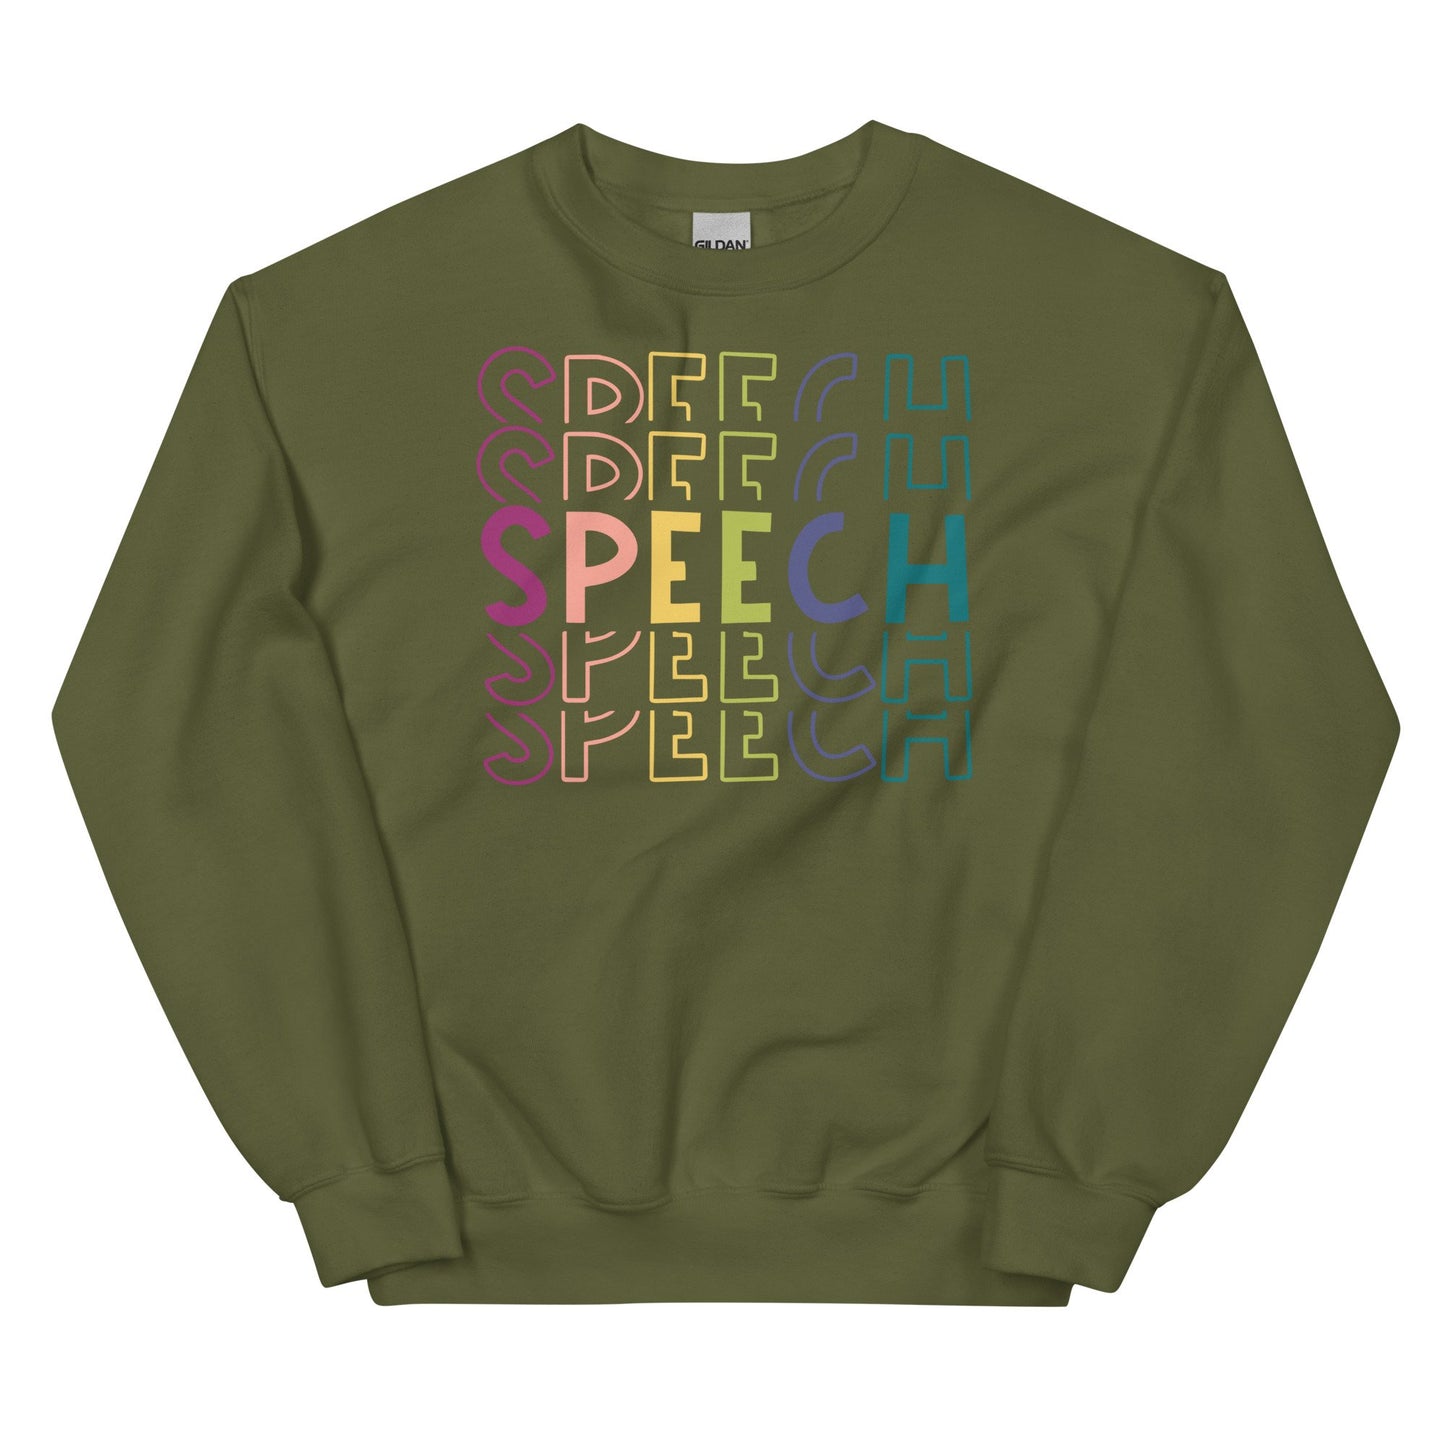 unisex-crew-neck-sweatshirt-military-green-front-630851214a53f.jpg